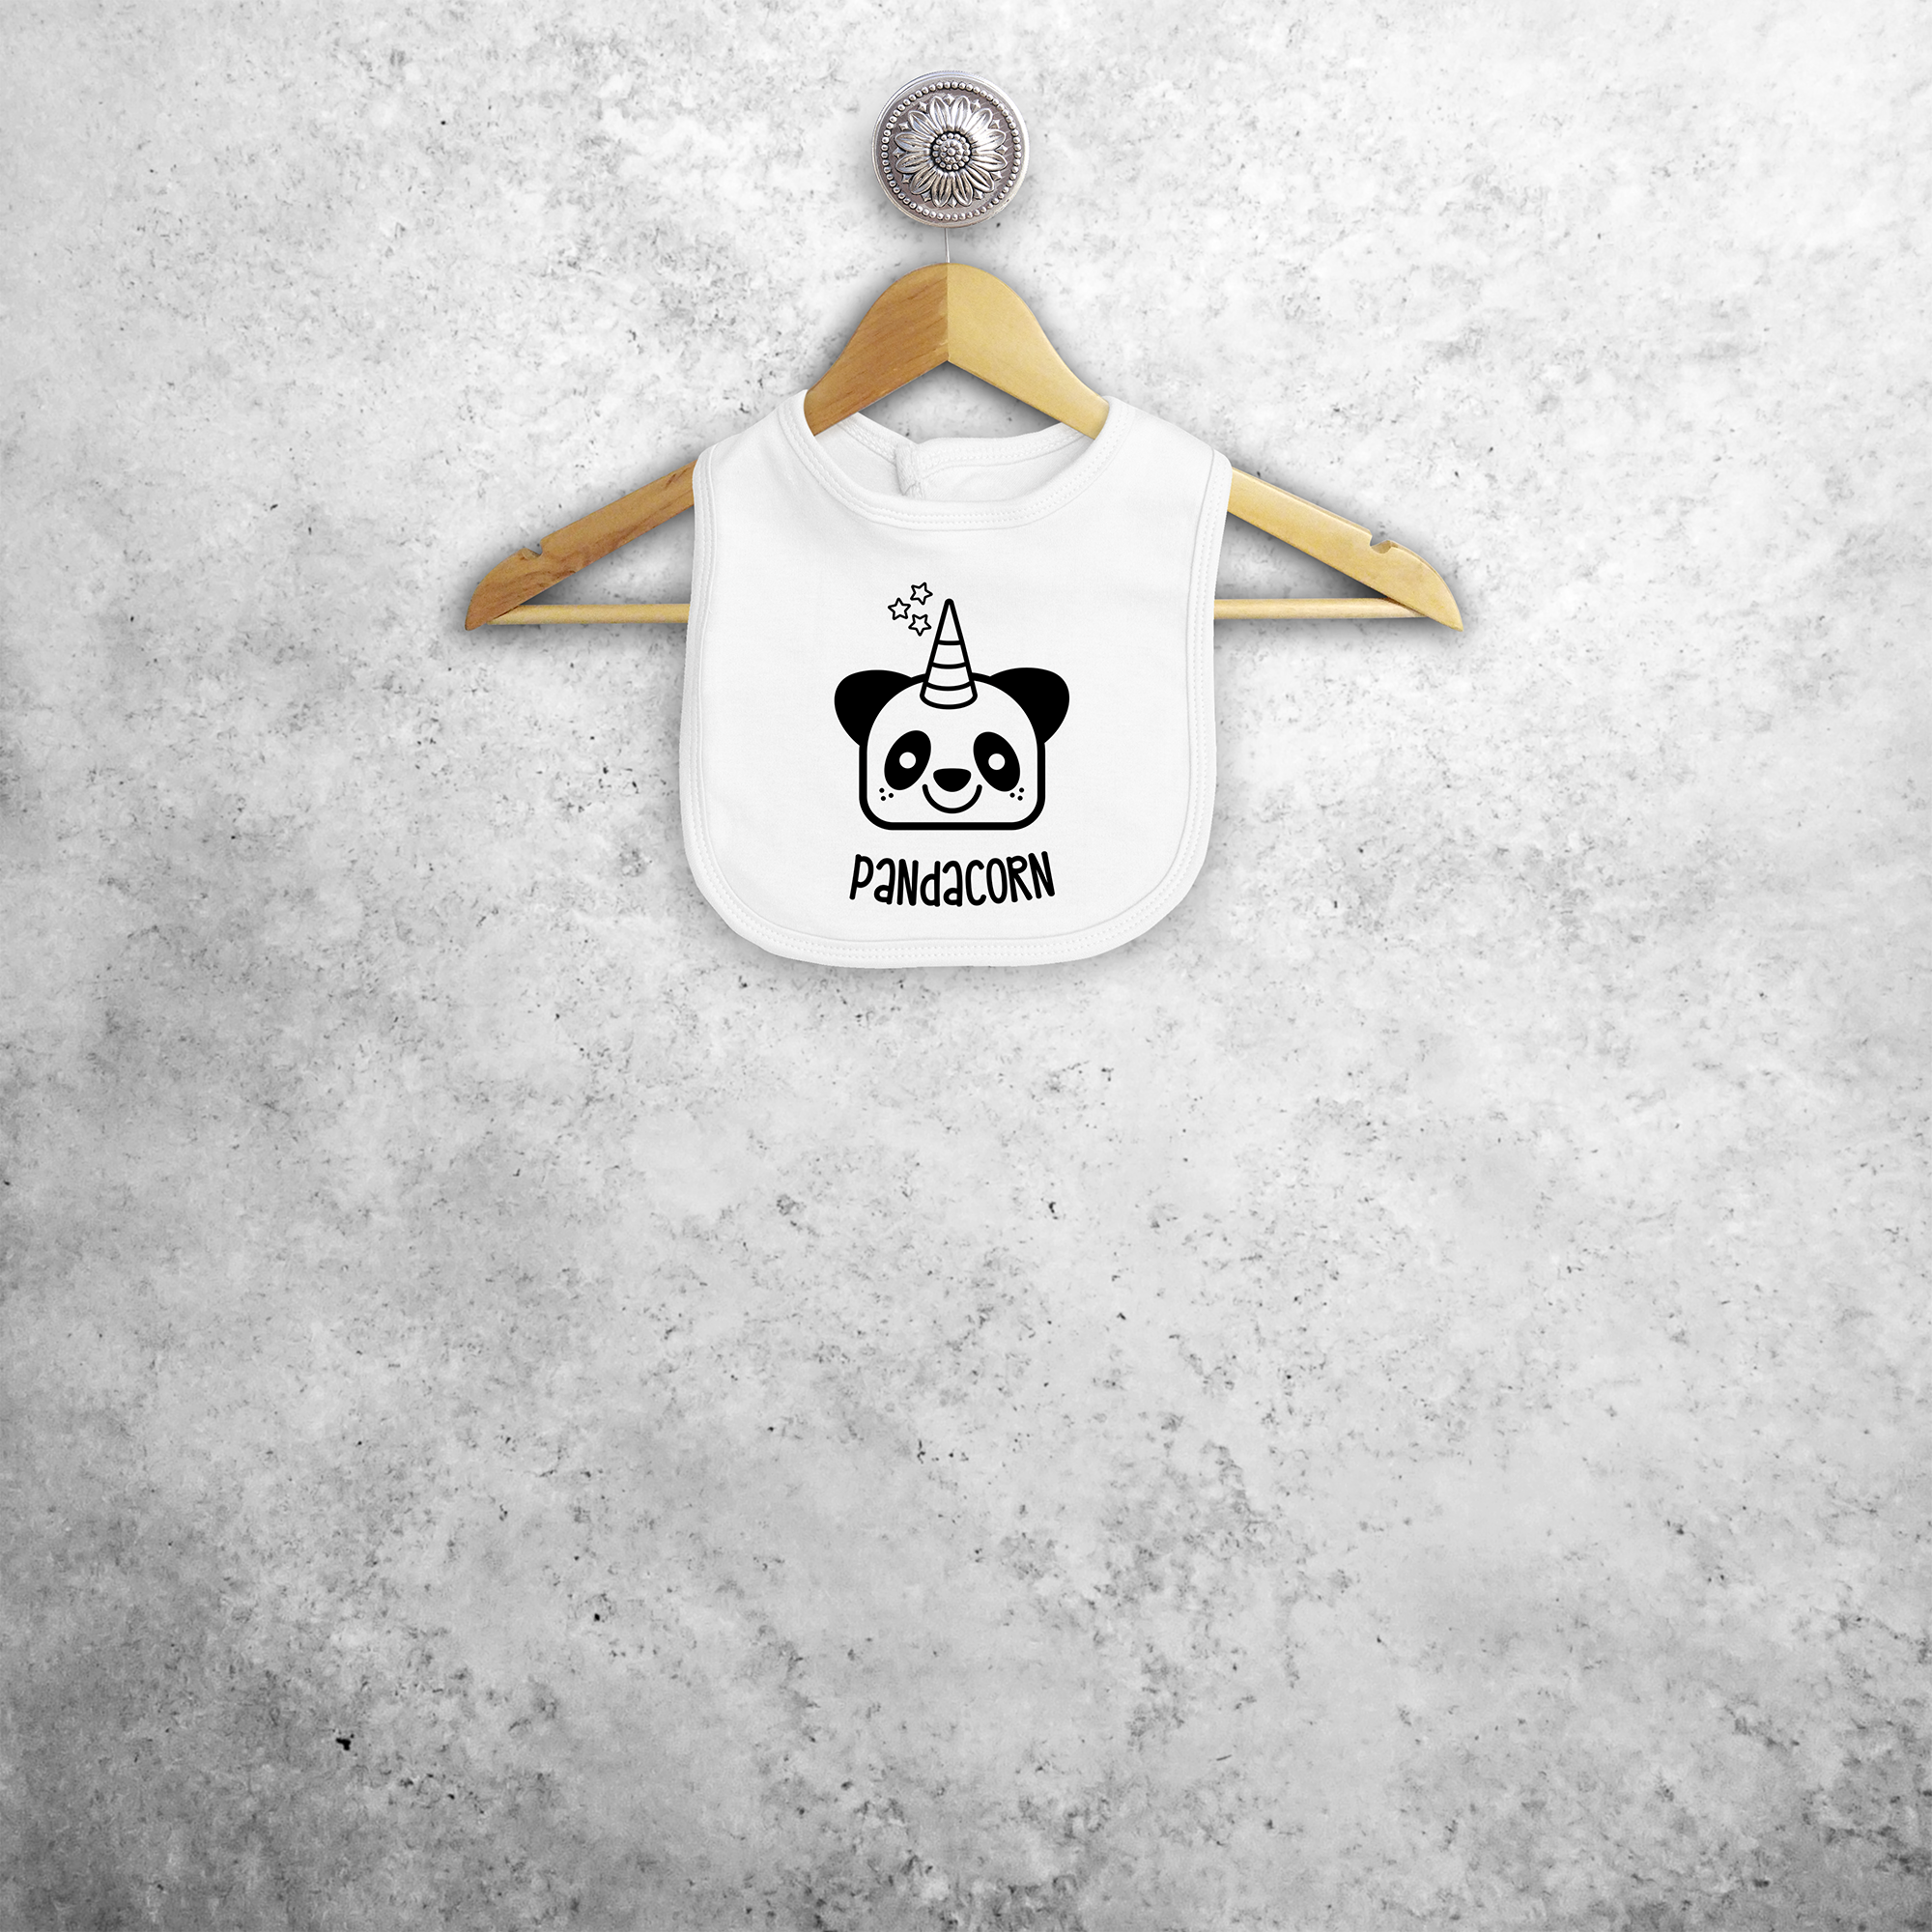 Pandacorn baby bib